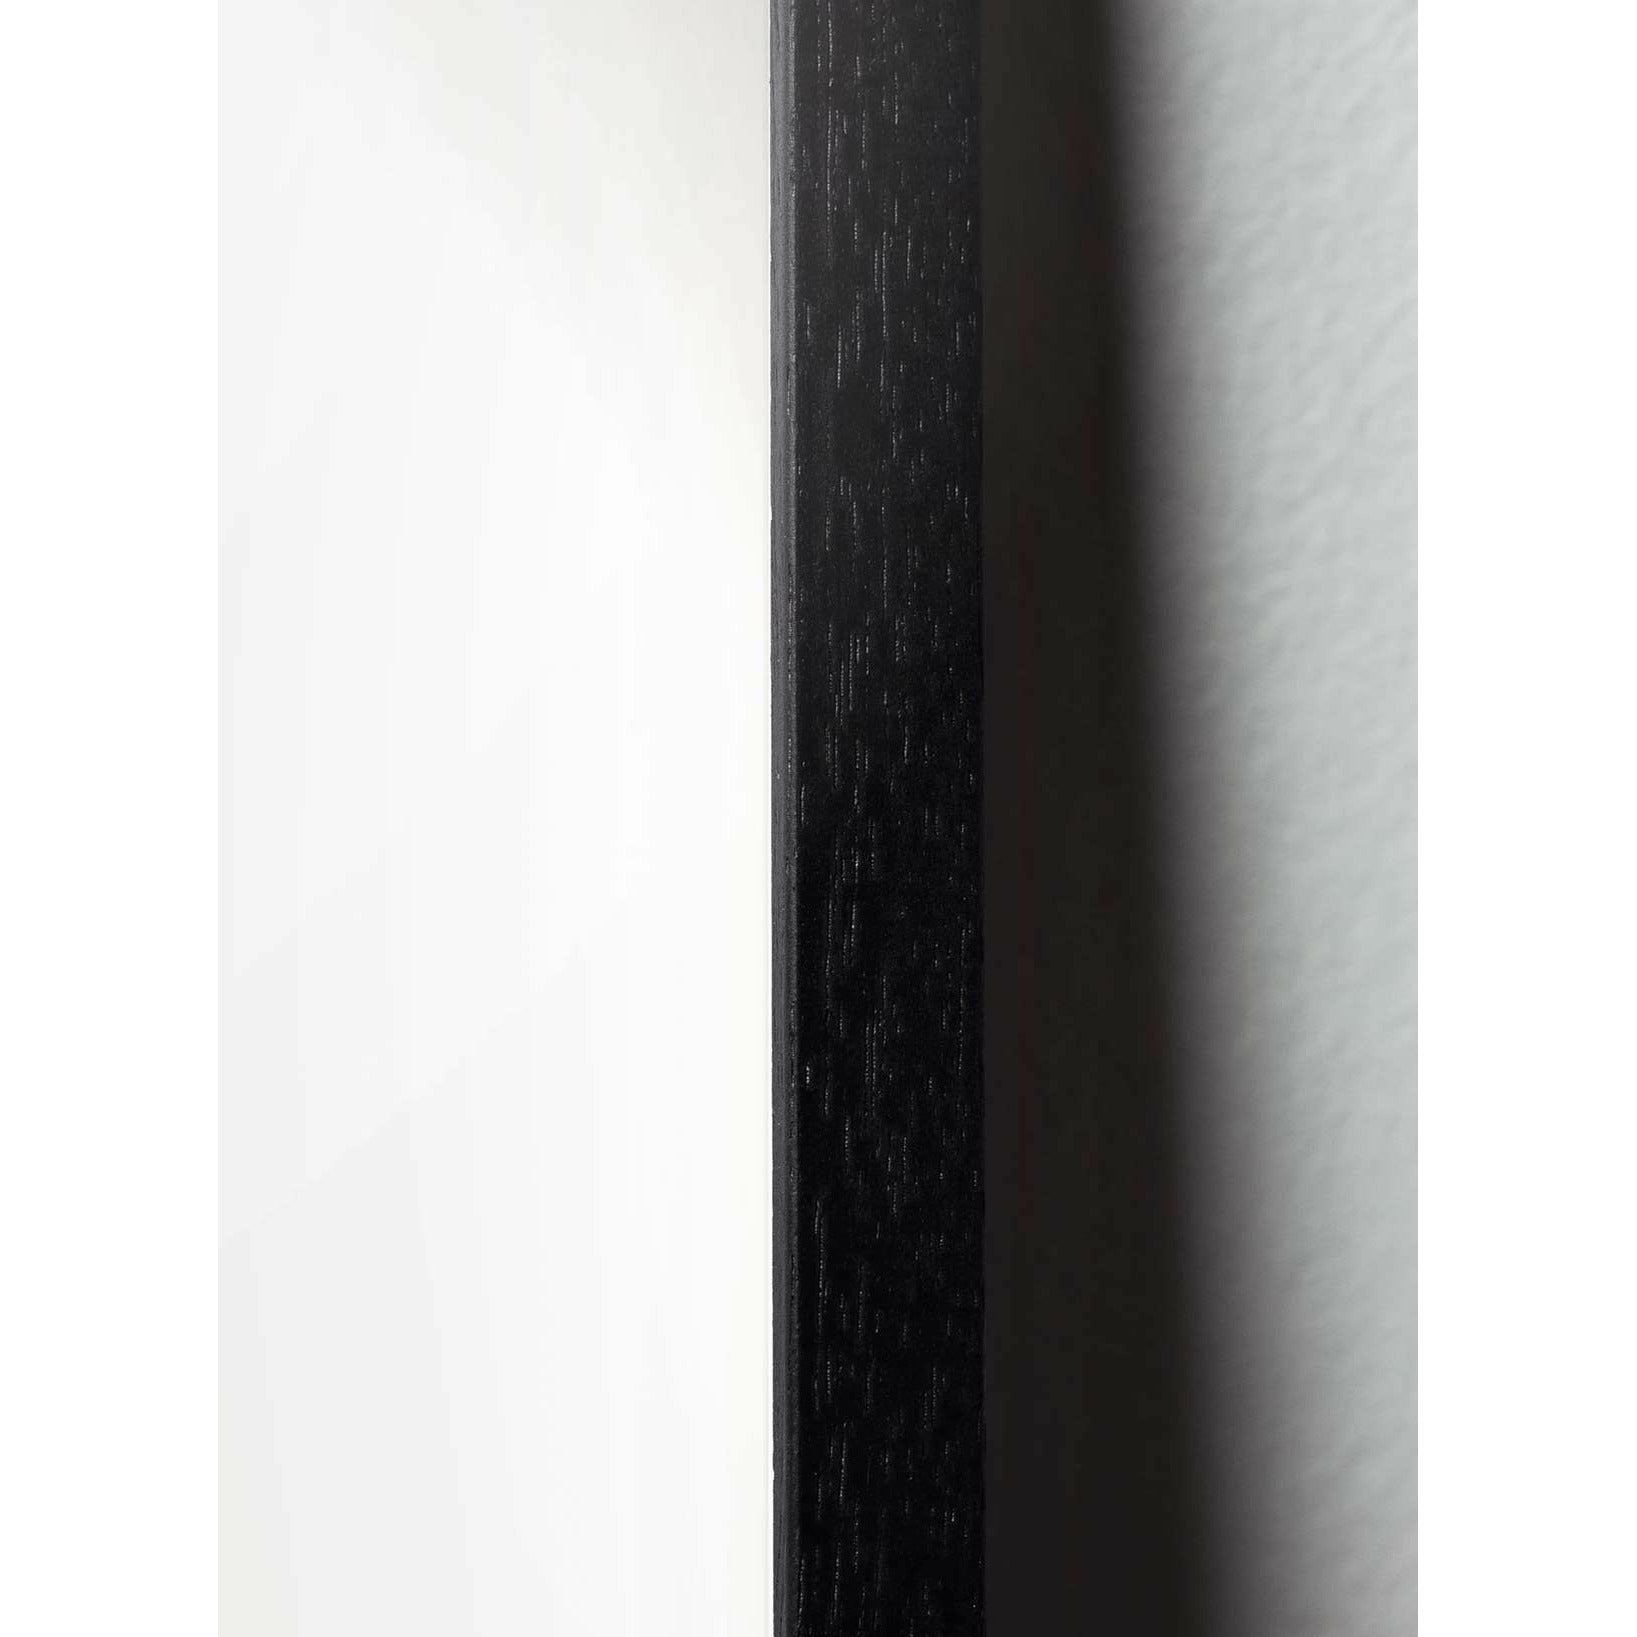 Póster clásico de Snowdrop de creación, marco en madera lacada negra de 70x100 cm, fondo verde